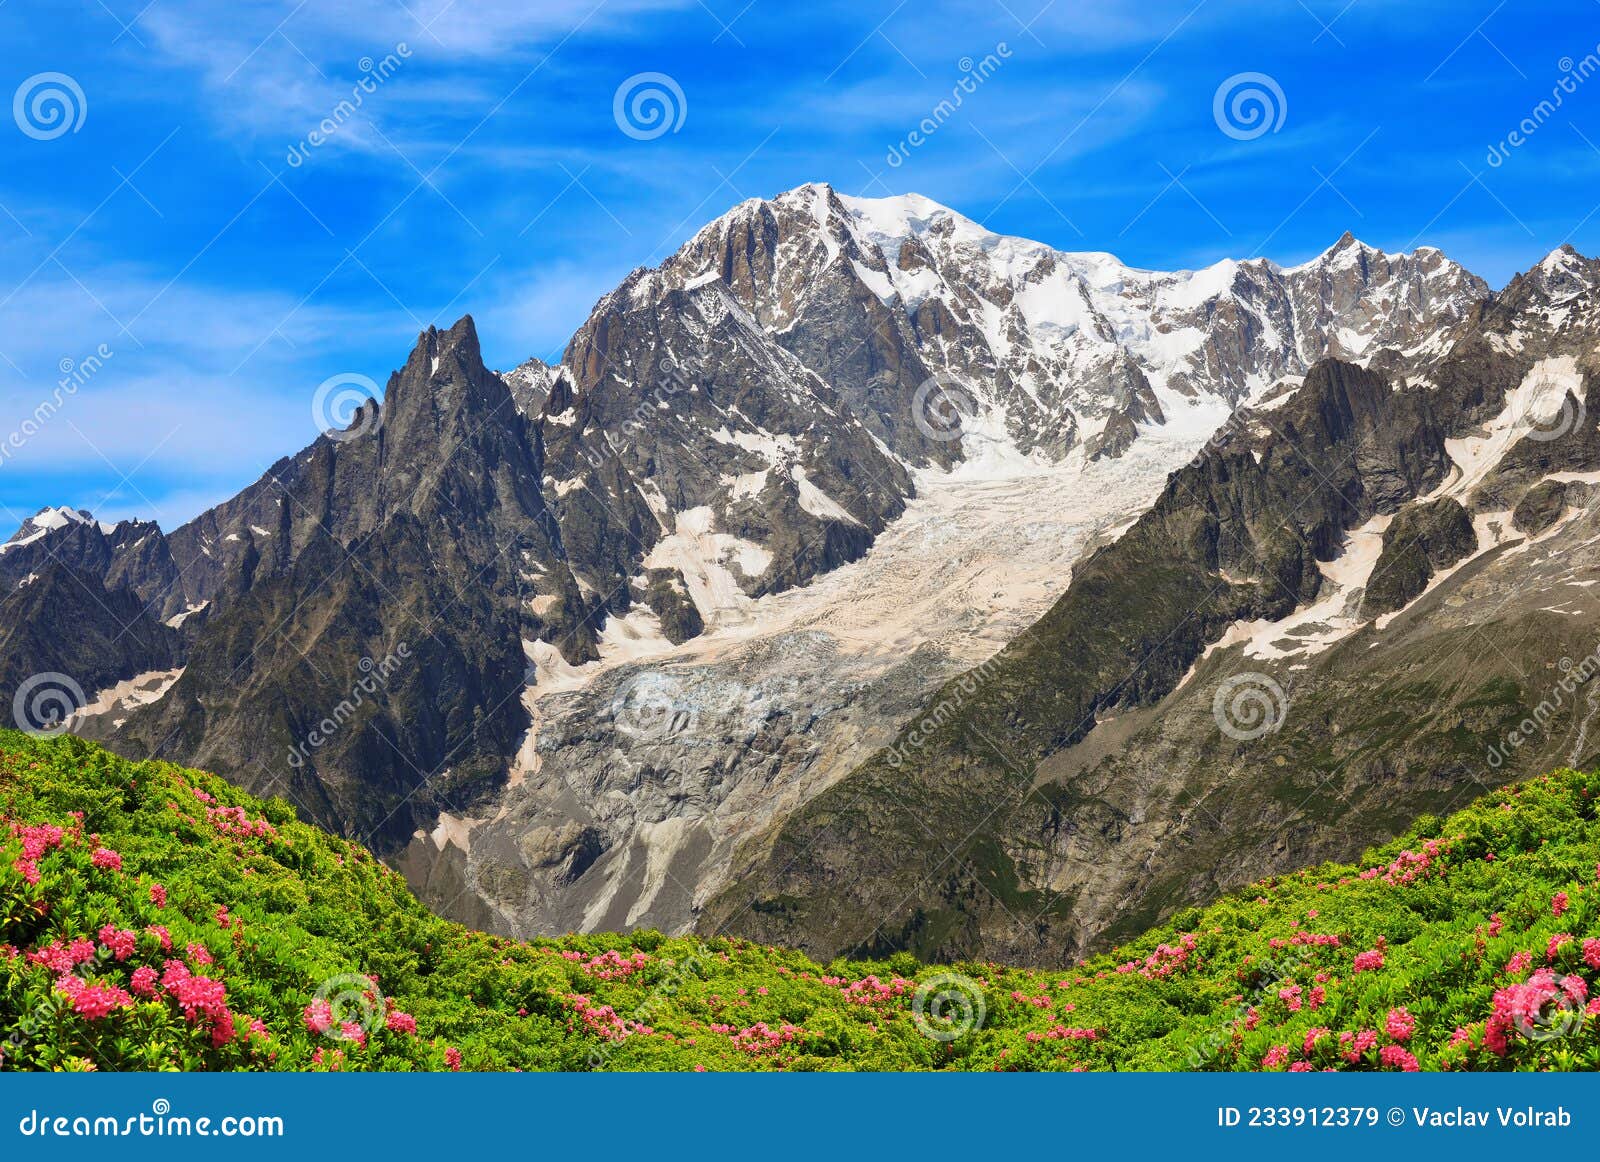 mont blanc  monte bianco , aosta valley, italy.